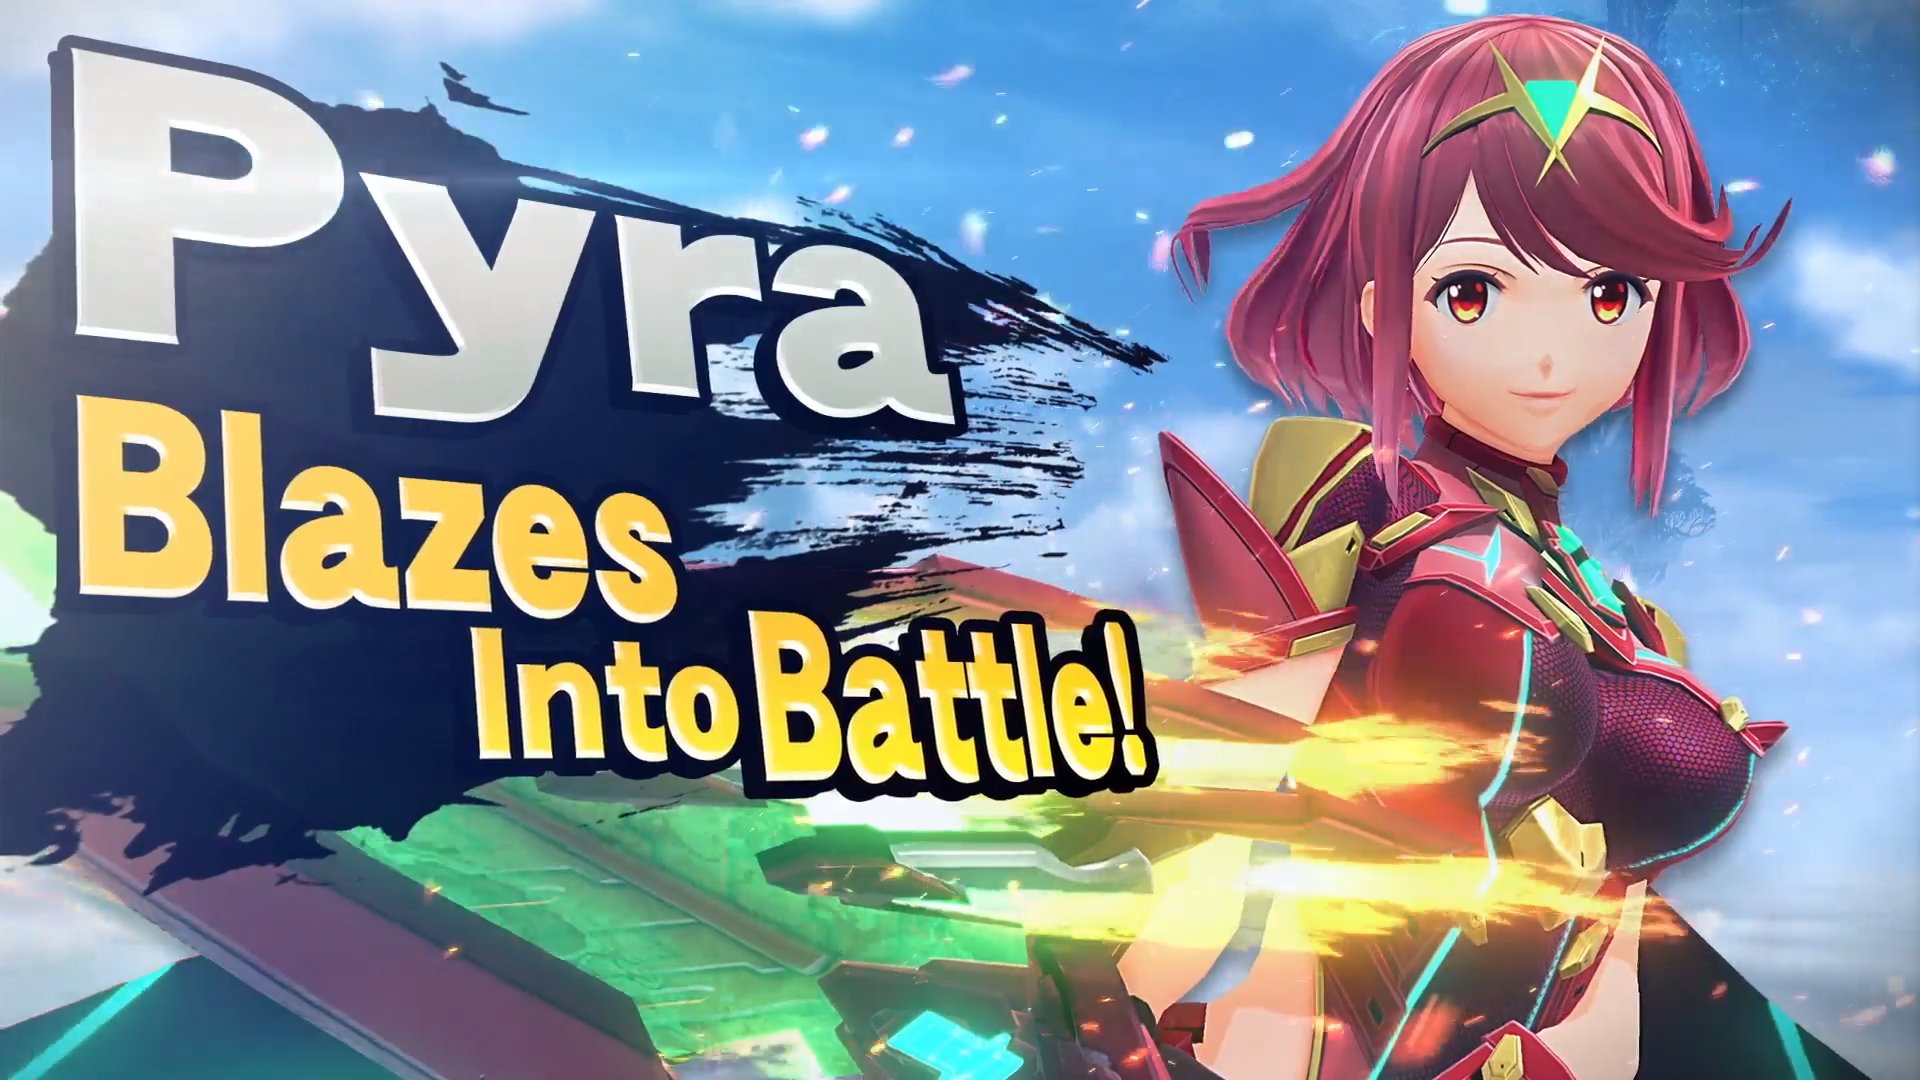 Pyra Blazes into Battle!